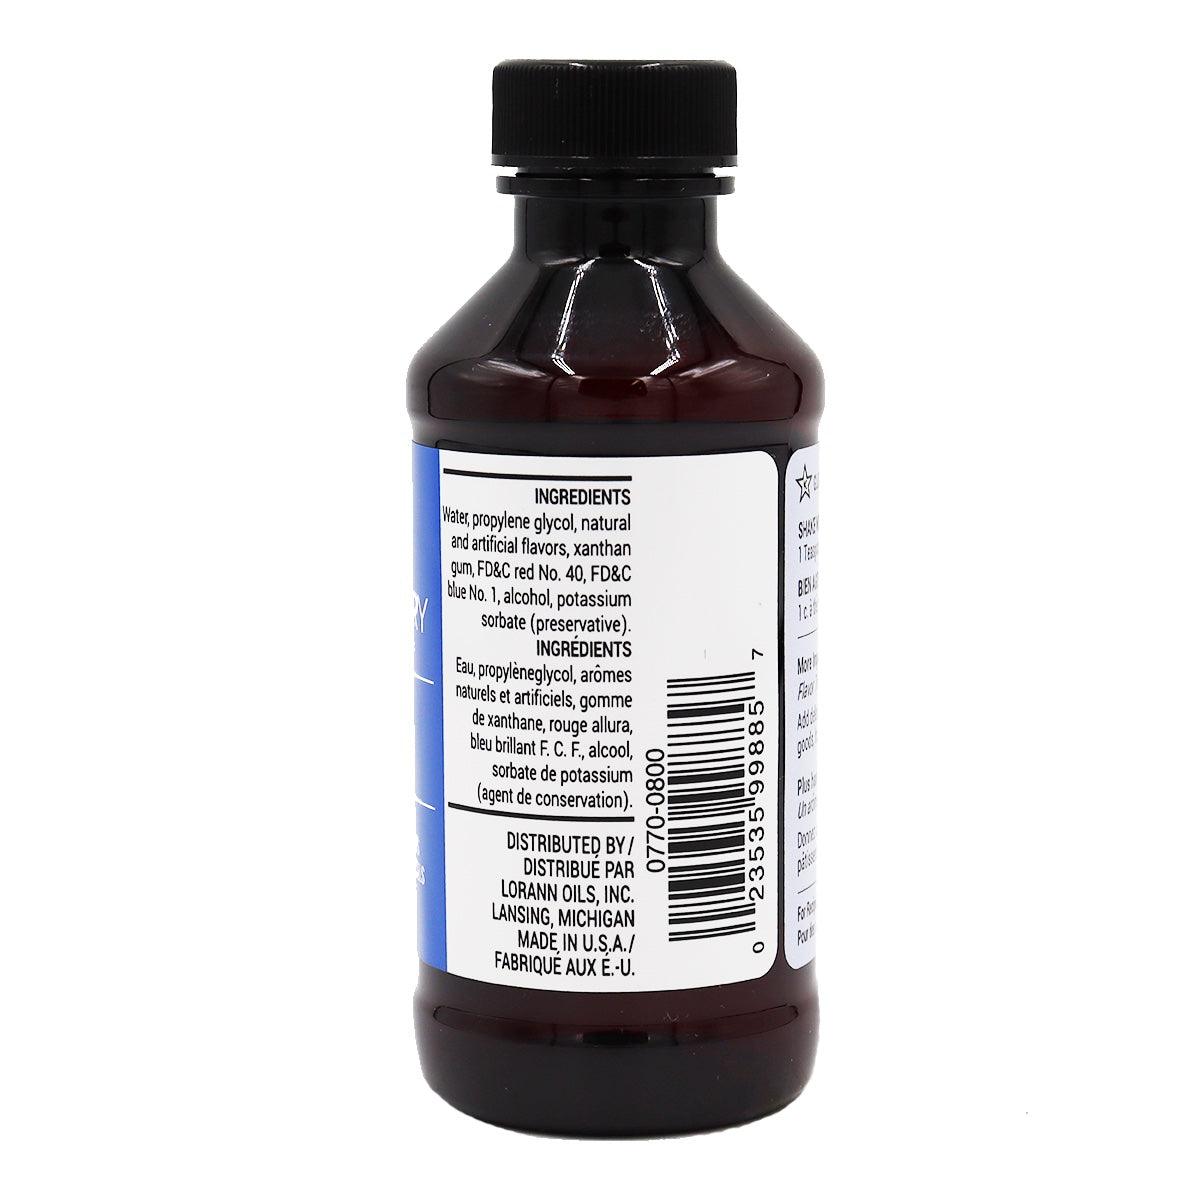 Blueberry Emulsion 4 fl oz (118ml) - ViaCheff.com